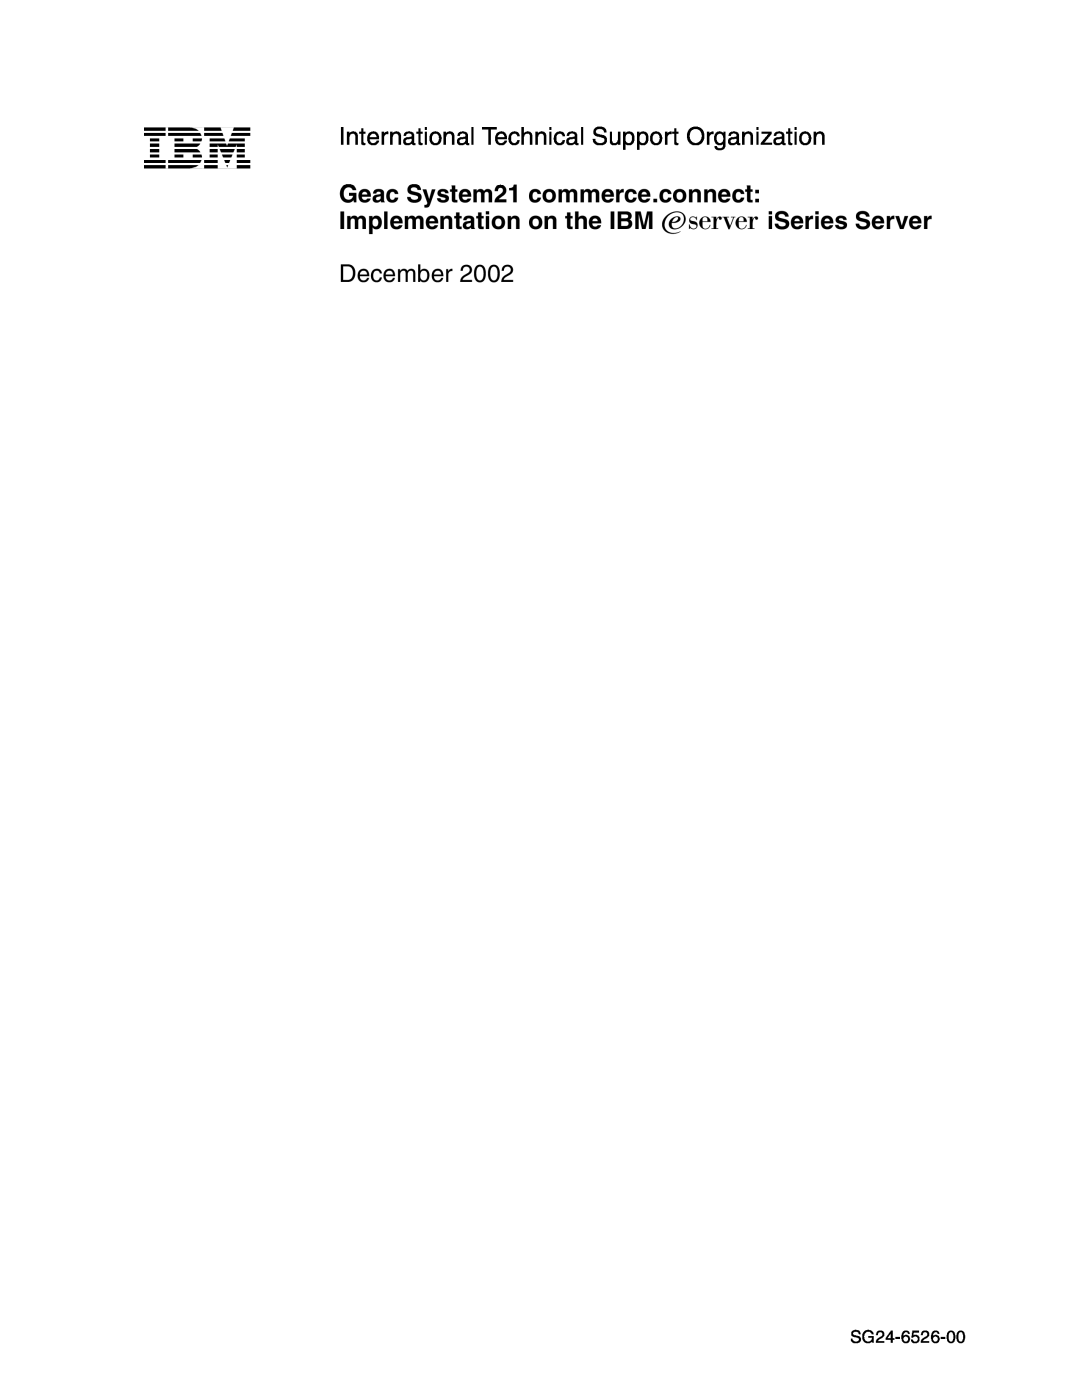 IBM SG24-6526-00 manual International Technical Support Organization, December 